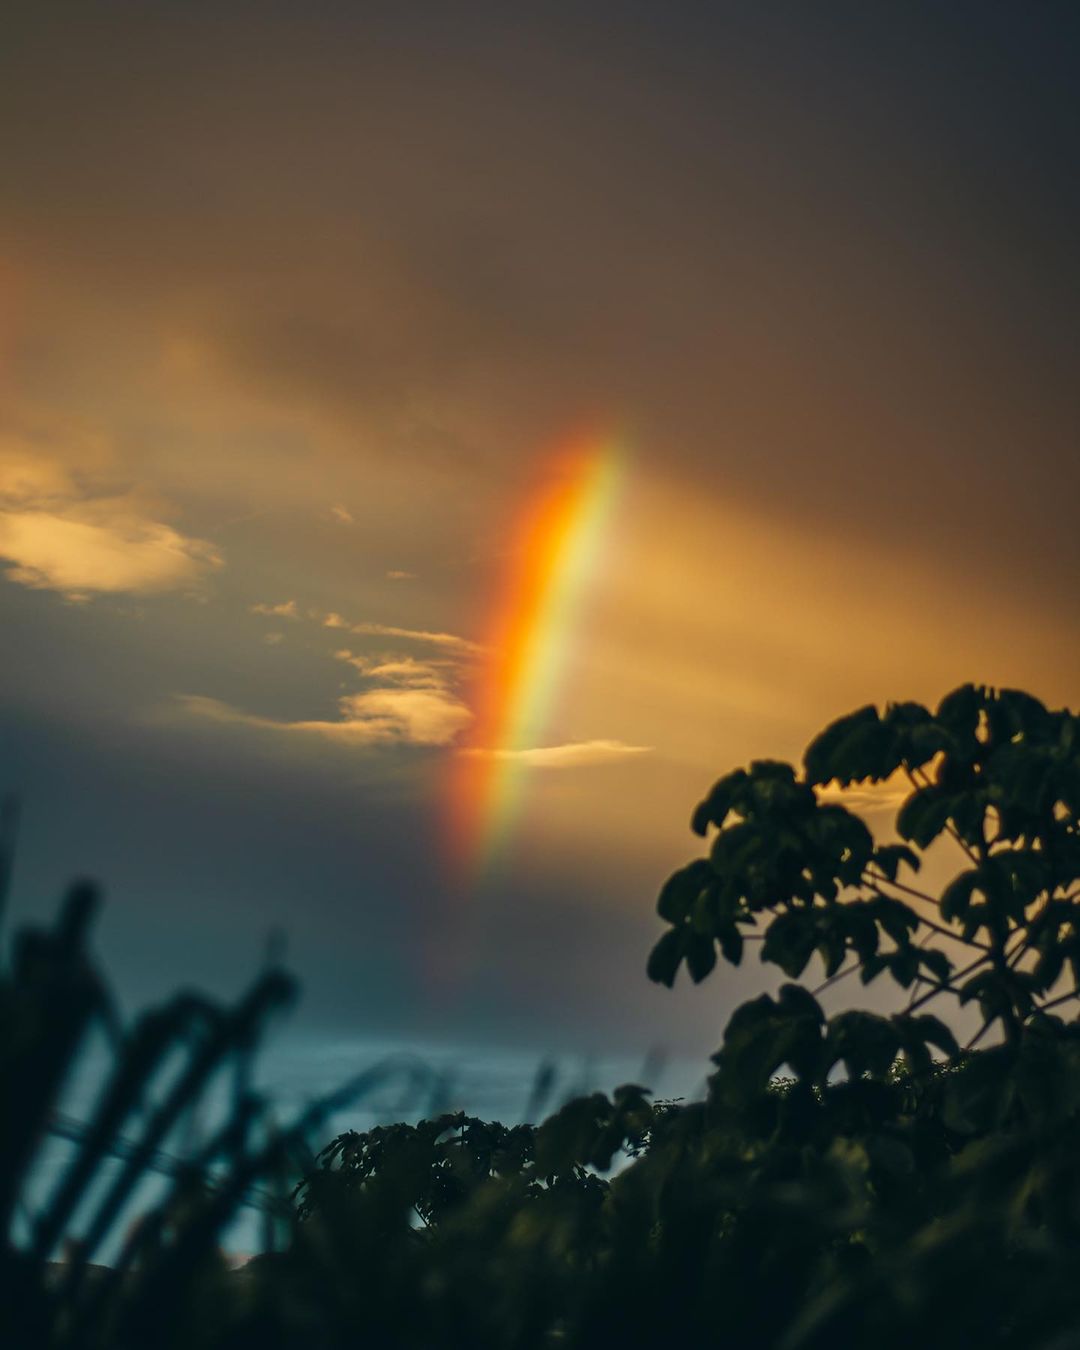 Belén Rodríguez shot of a rainbow over the ocean with tropical plants.